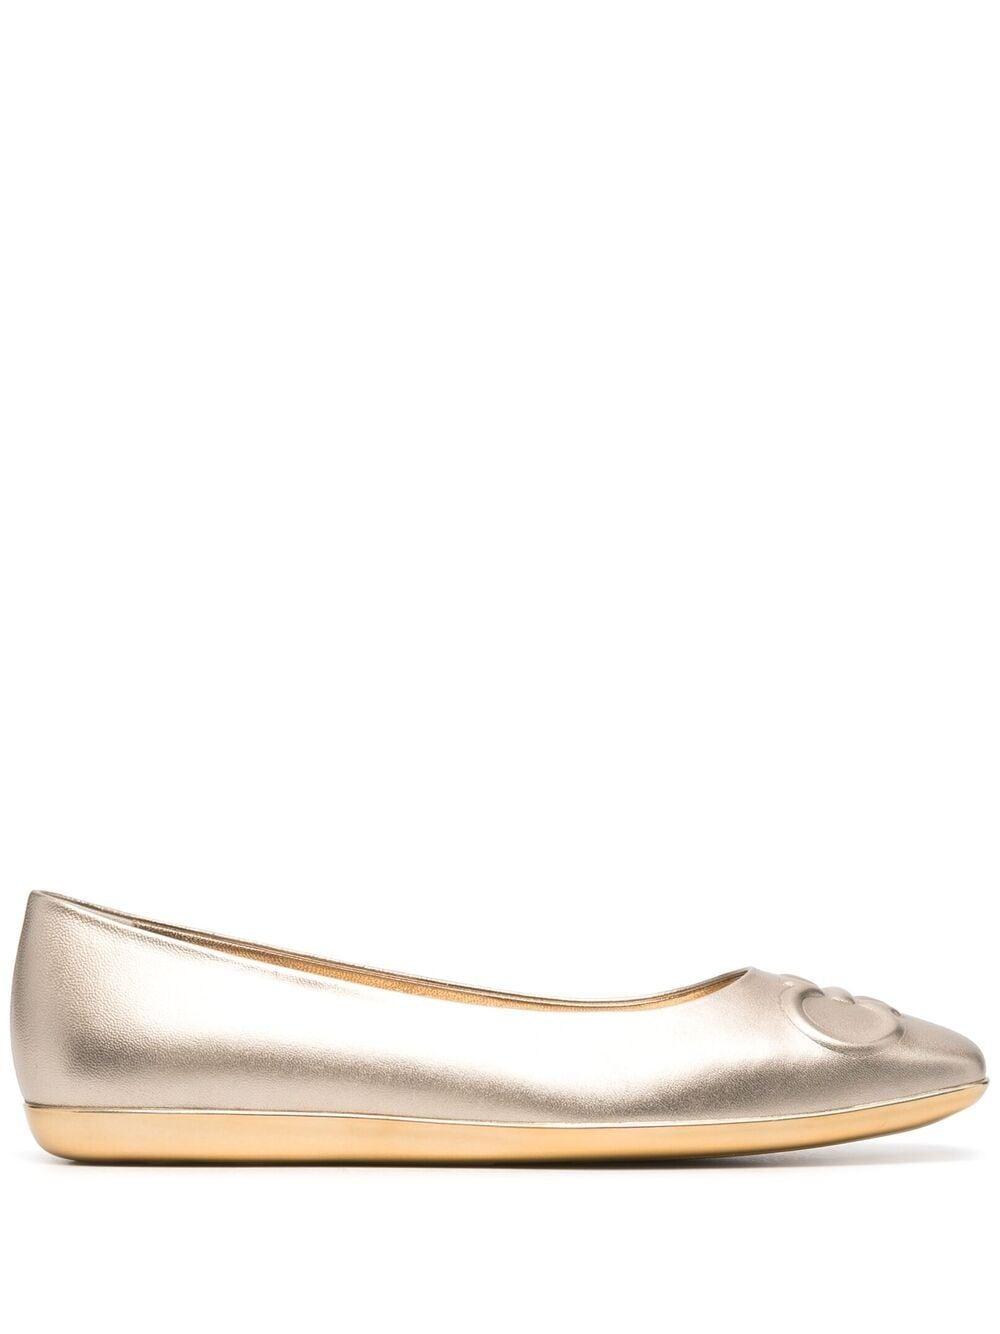 Ferragamo Gancini-motif Square-toe Ballerina Shoes in Metallic | Lyst